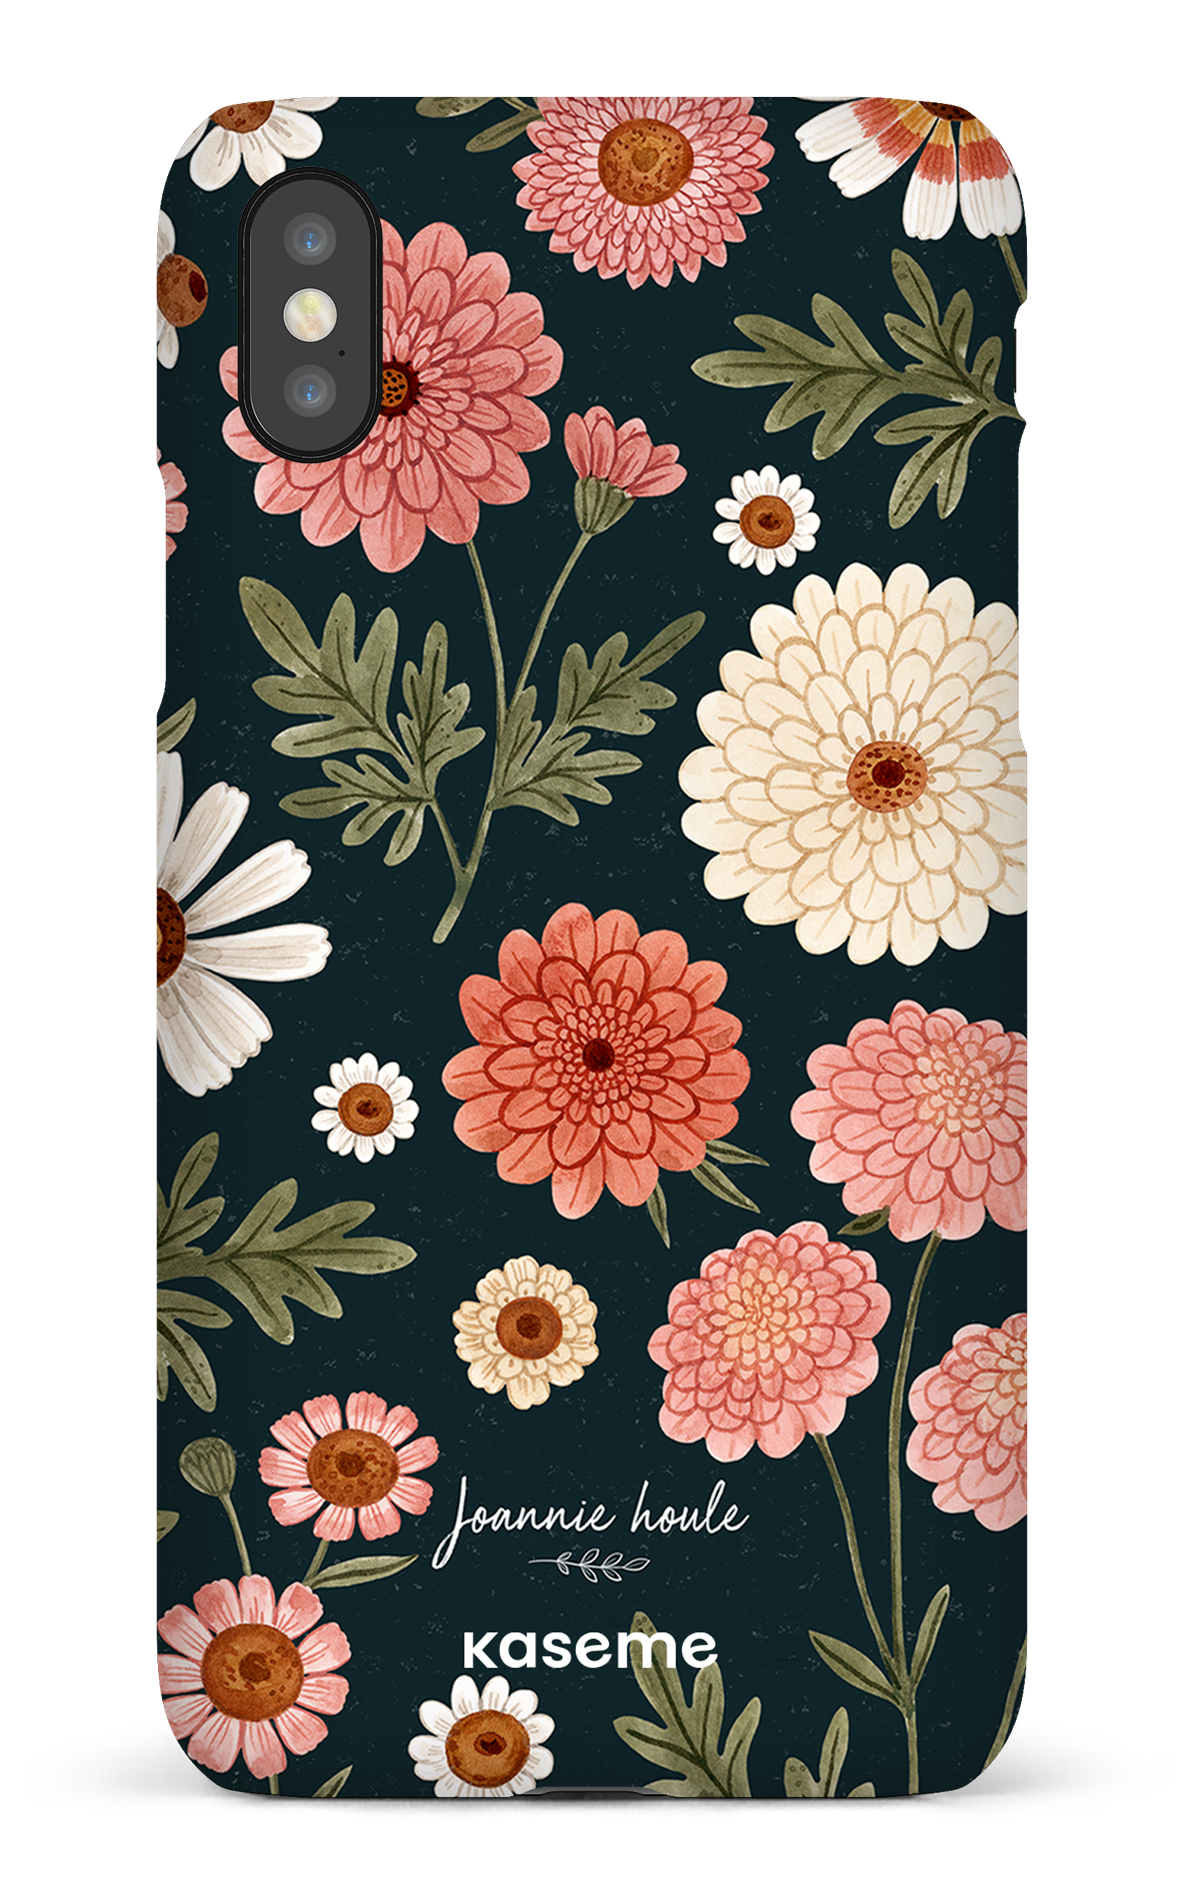 Chrysanthemums by Joannie Houle - iPhone X/Xs